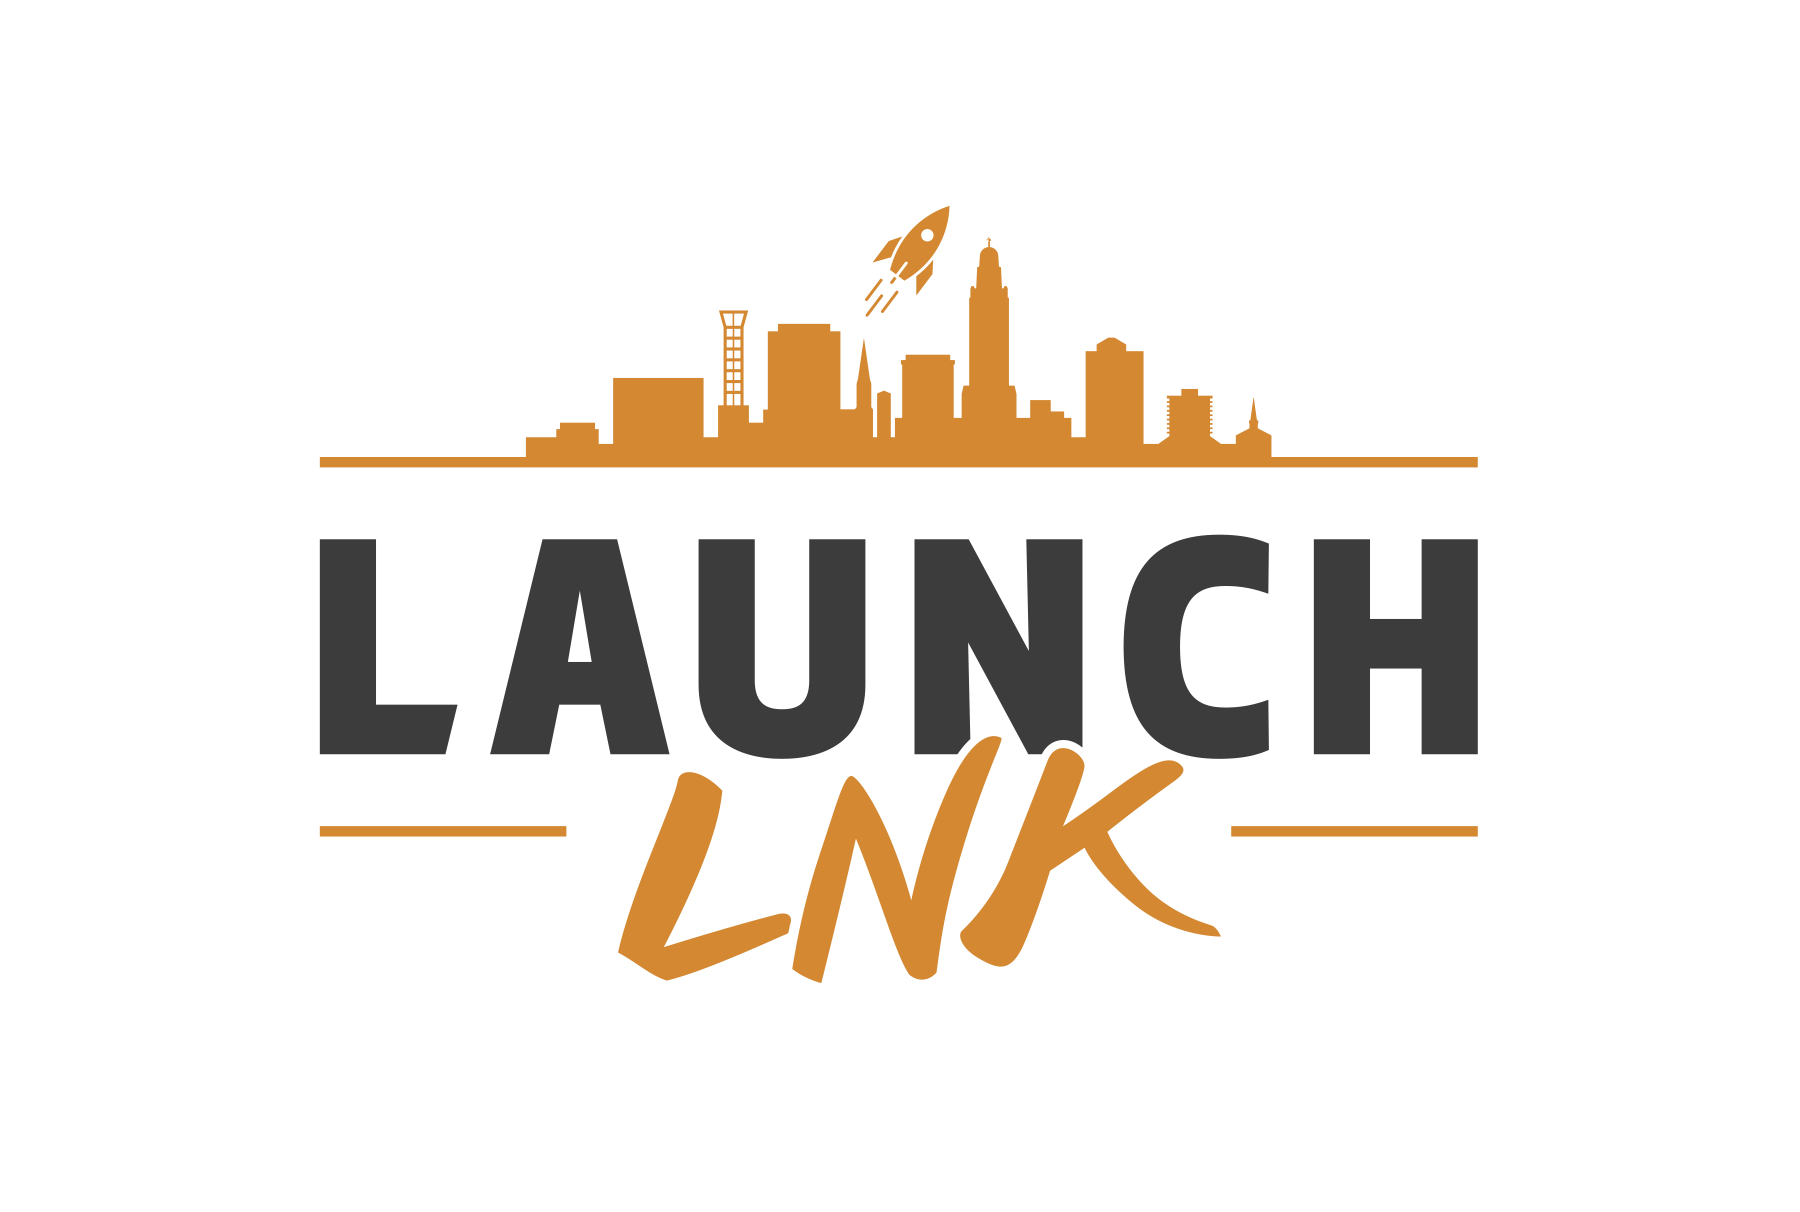 LaunchLNK Grant Program Expands, Awards Six Lincoln Startups $20k